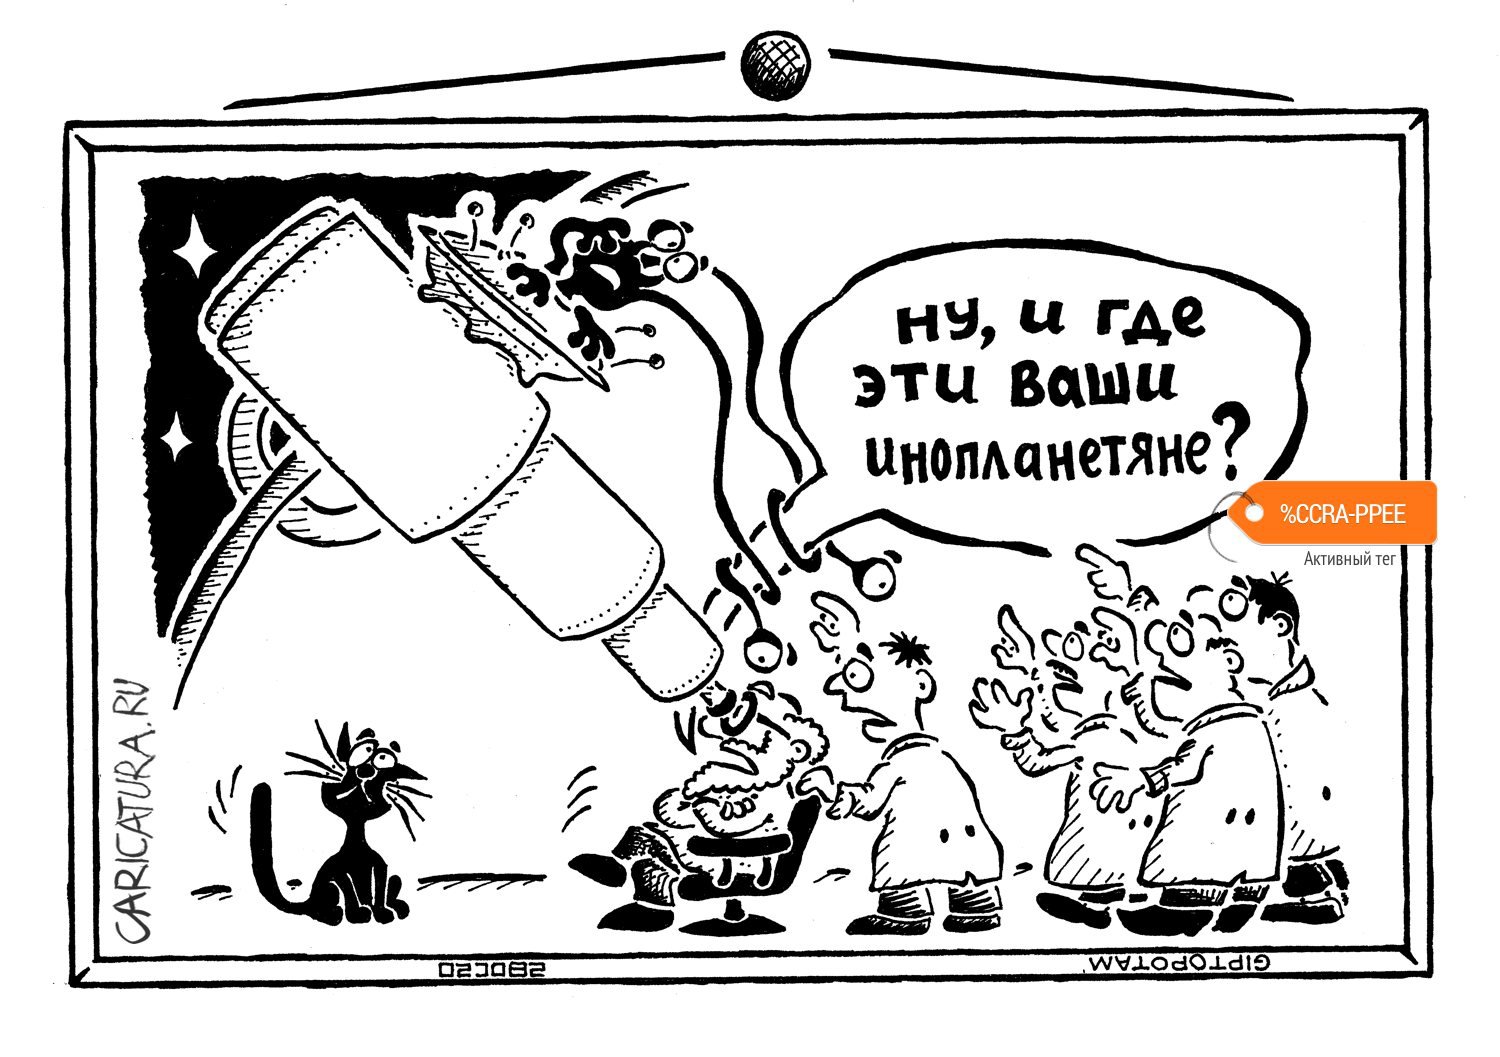 Карикатура "Братья по раз...ному", Александр Евангелистов